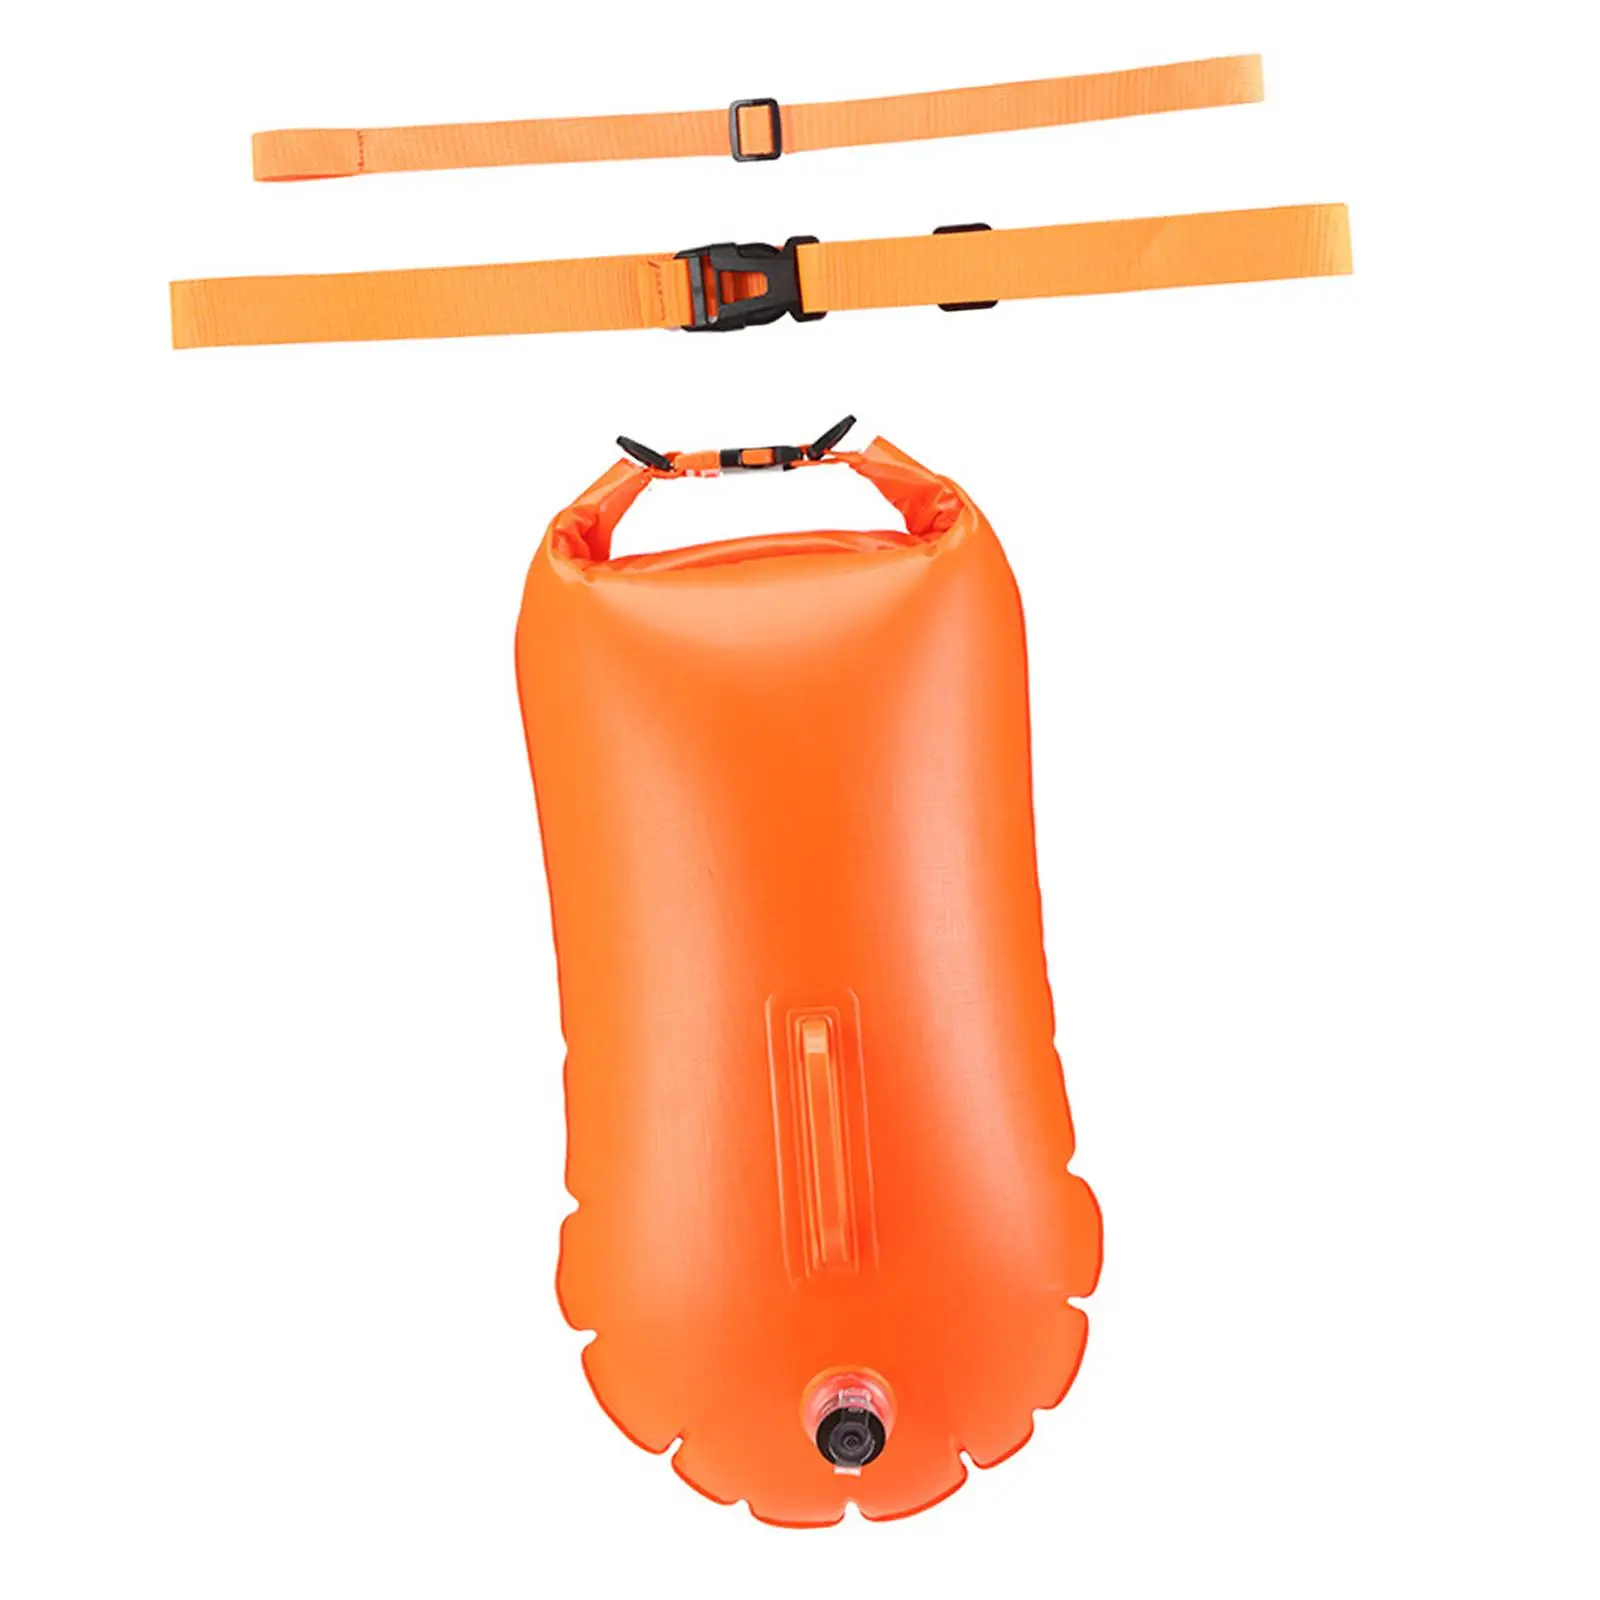 Inflatable Swim Buoy Waterproof Bag Adjustable Waist Belt Floating Bag for Water Sports Surfing Kayaking Hiking Swimming